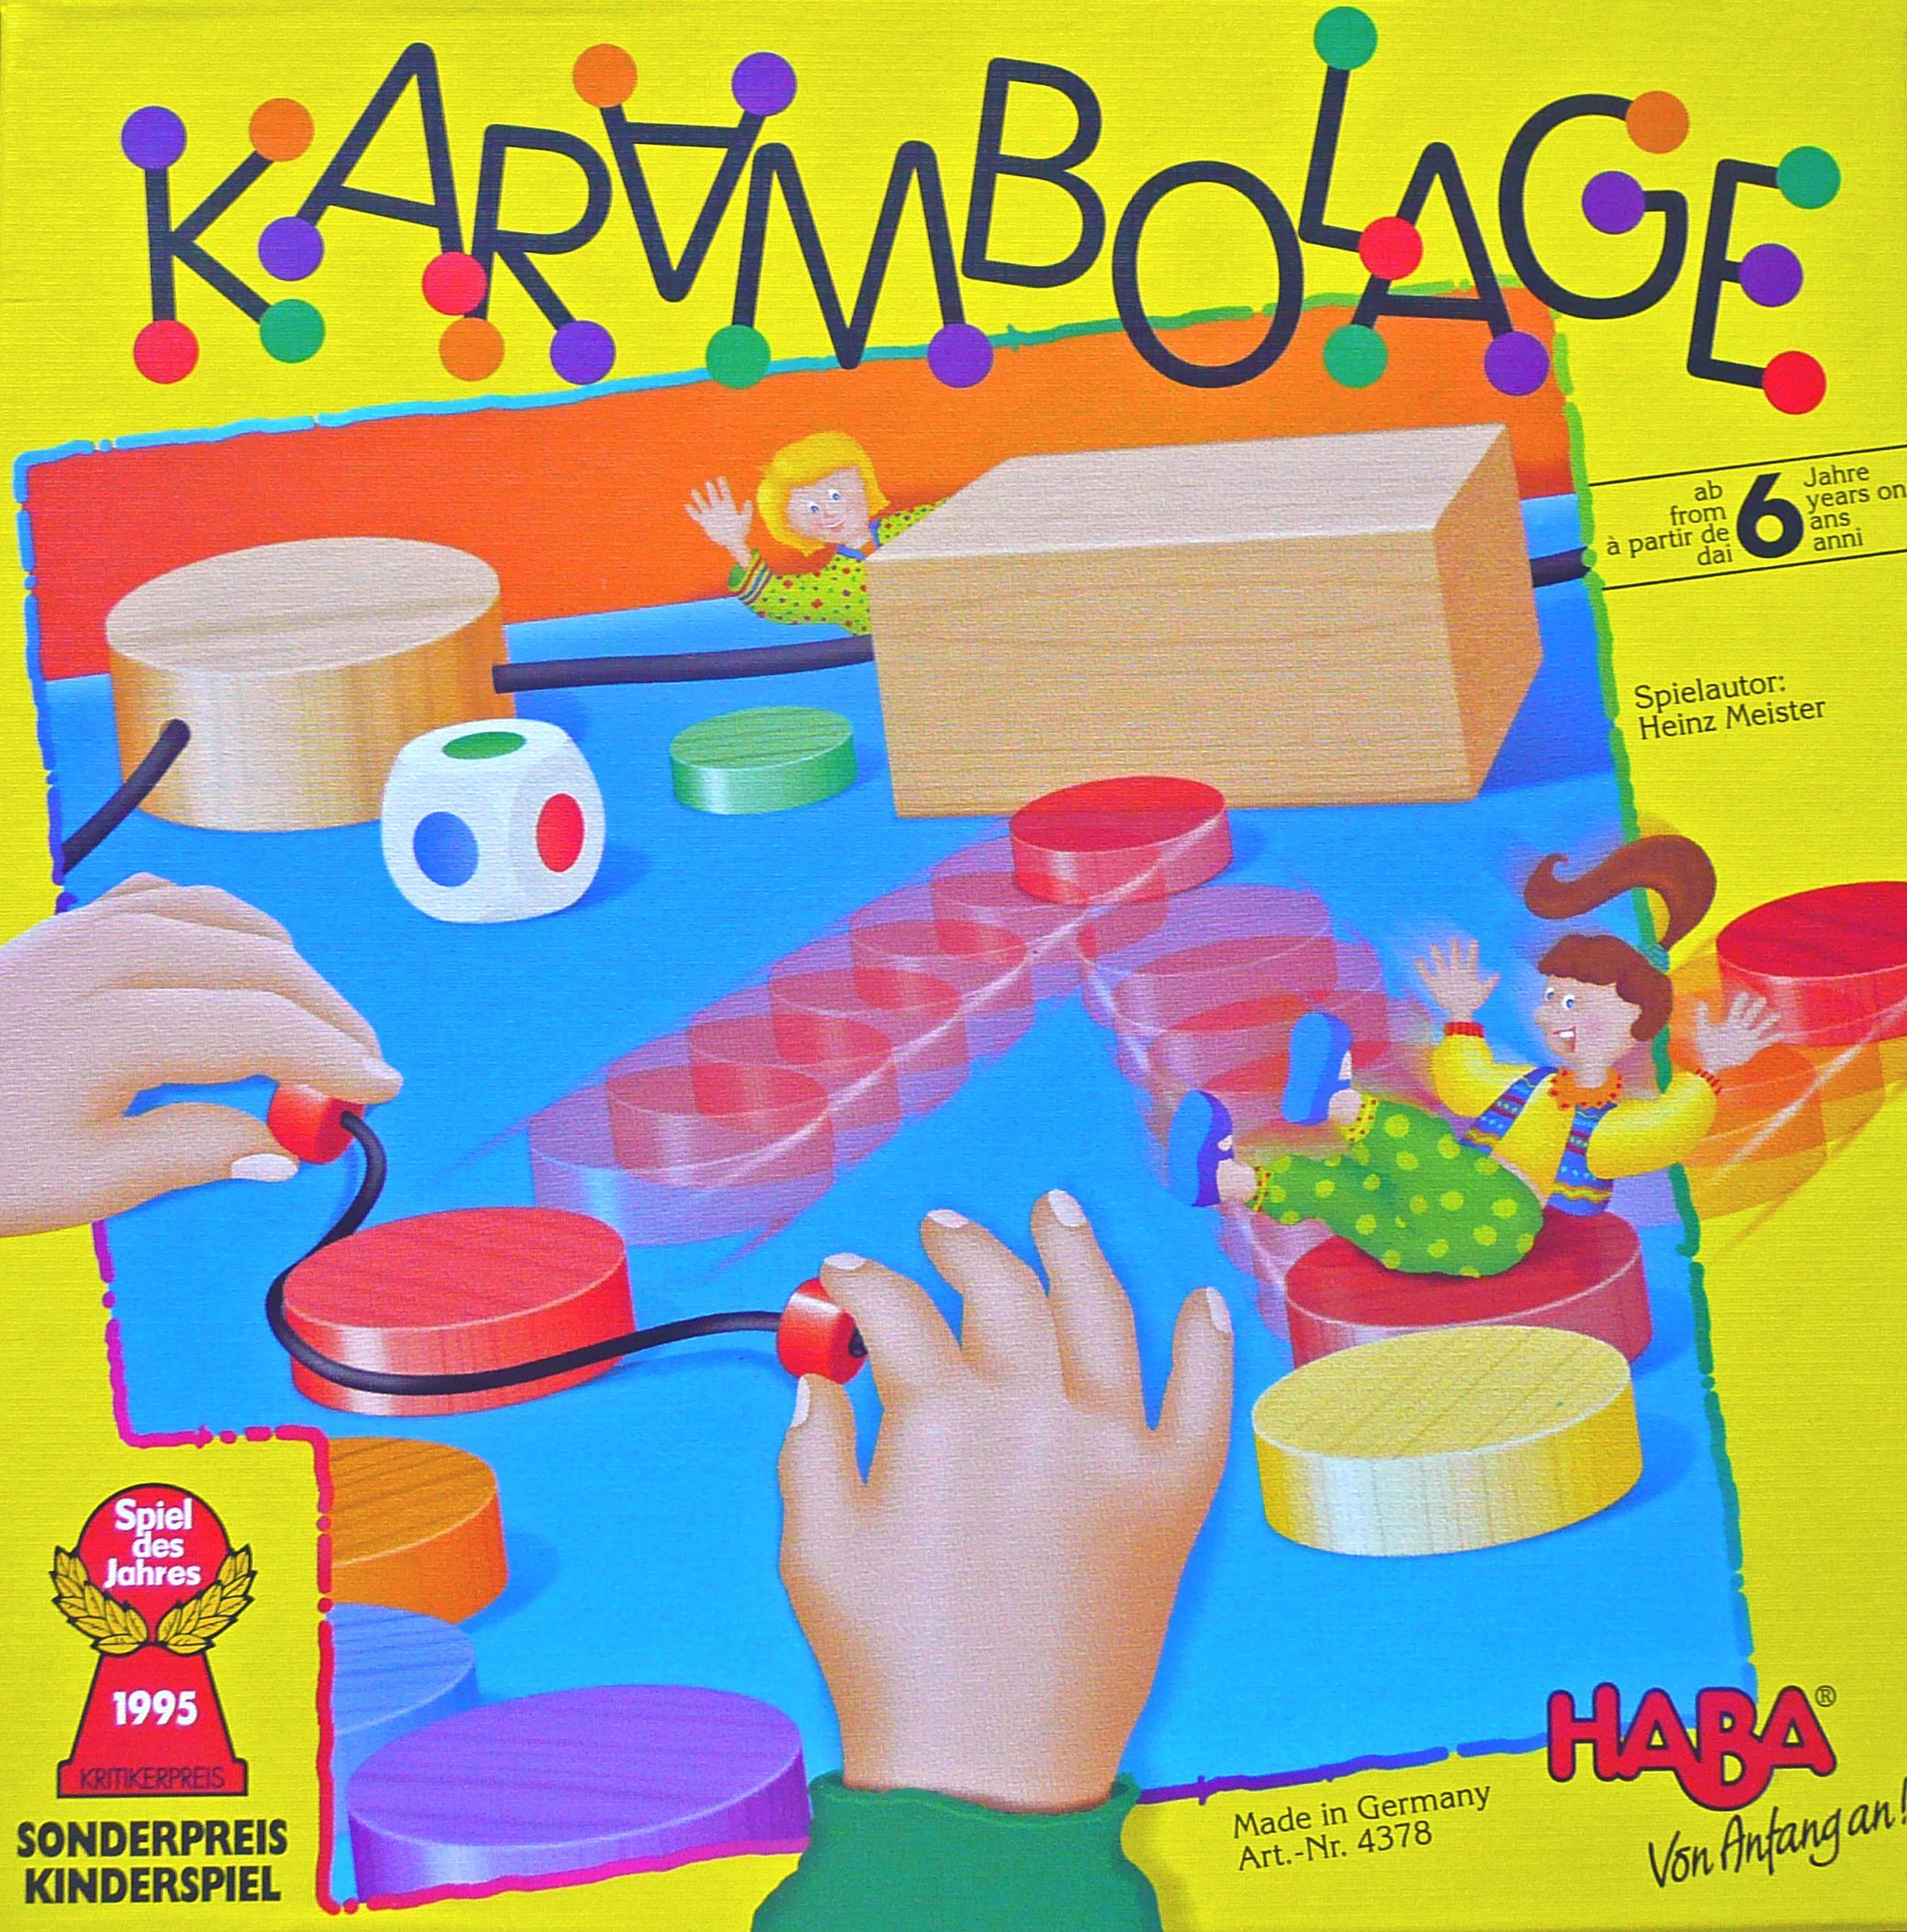 Karambolage